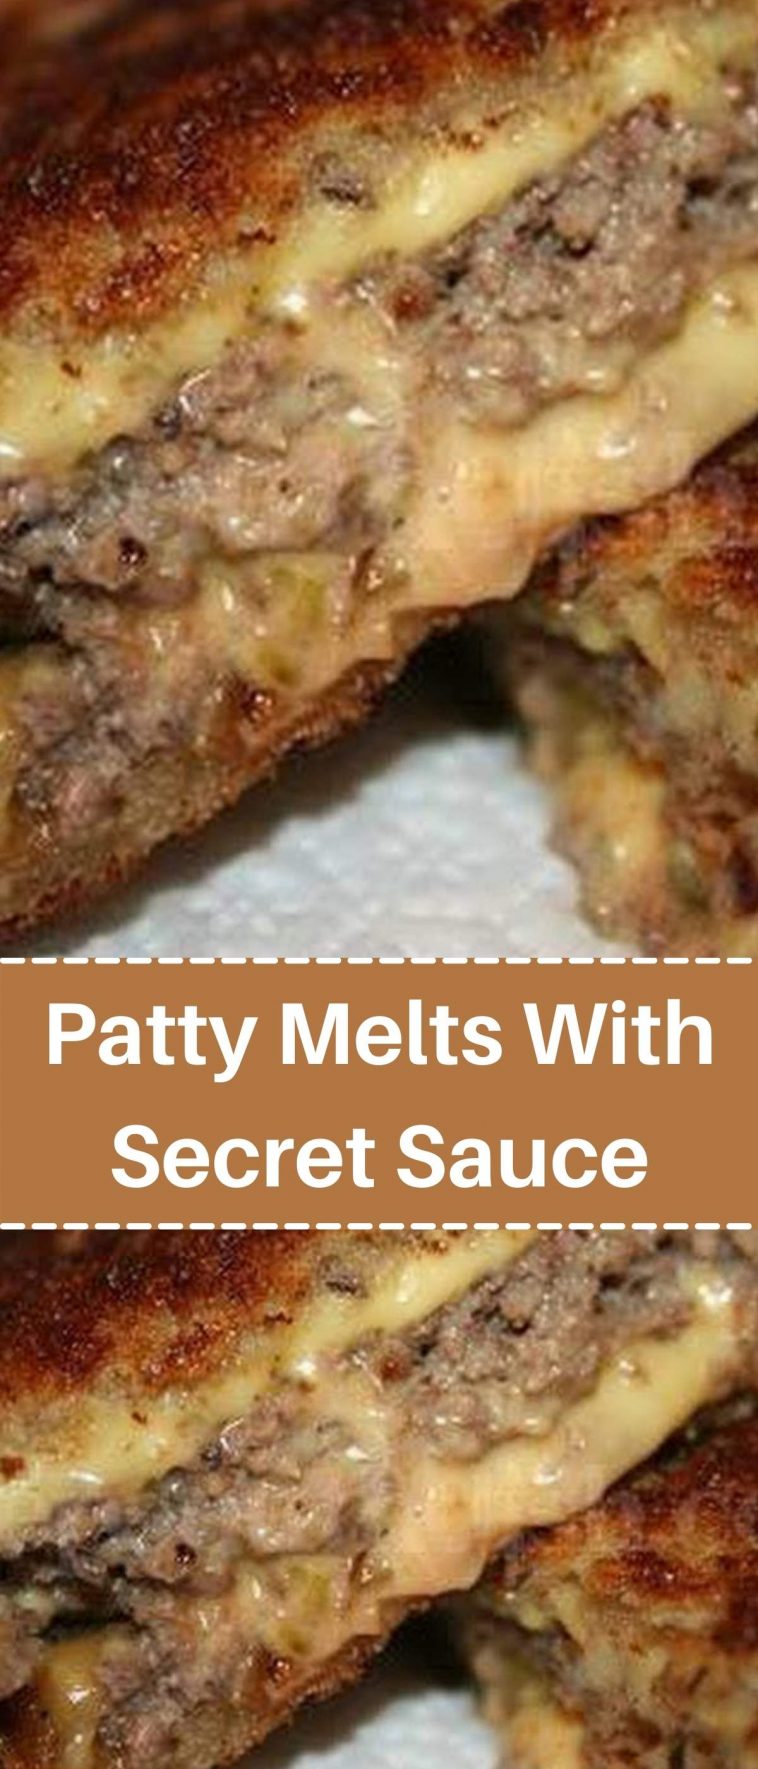 Patty Melts With Secret Sauce